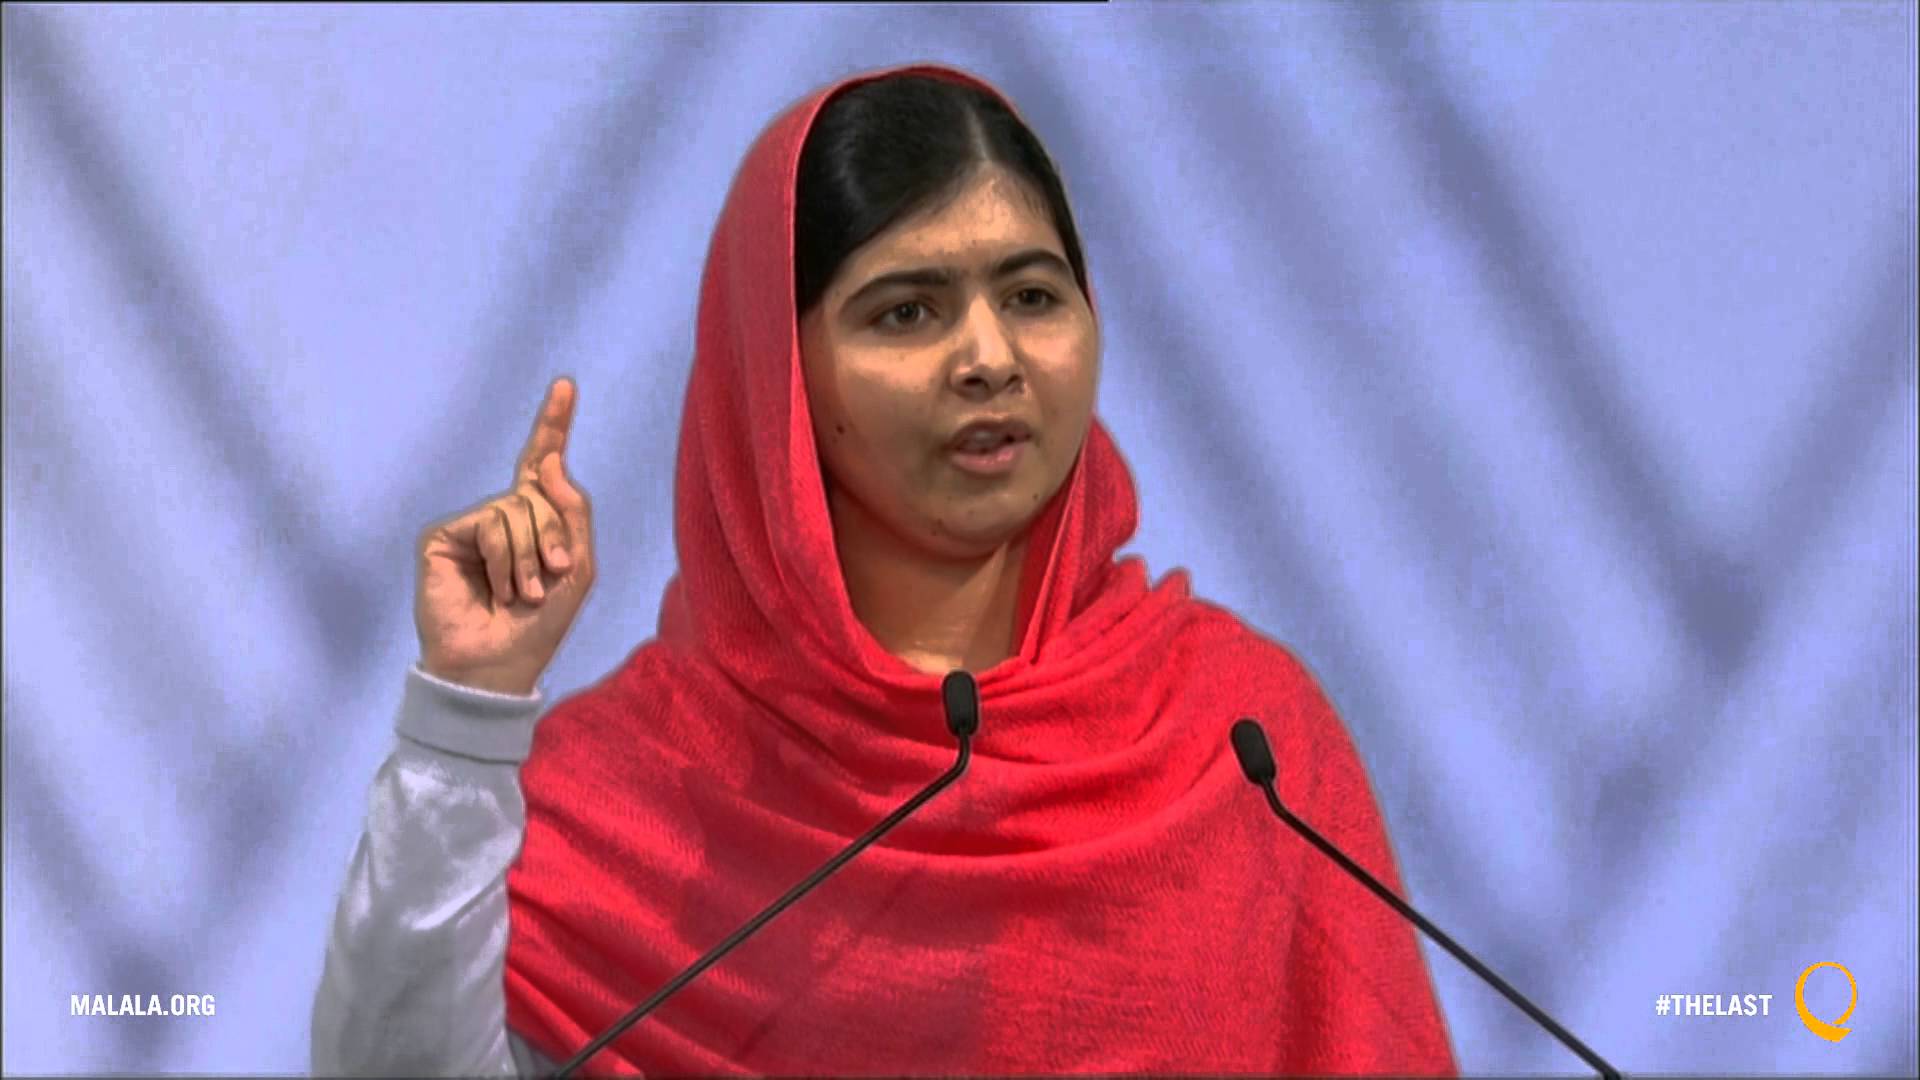 Malala Yousafzai - Biography - Children's Activist, Women's Rights Activist - Biography.com